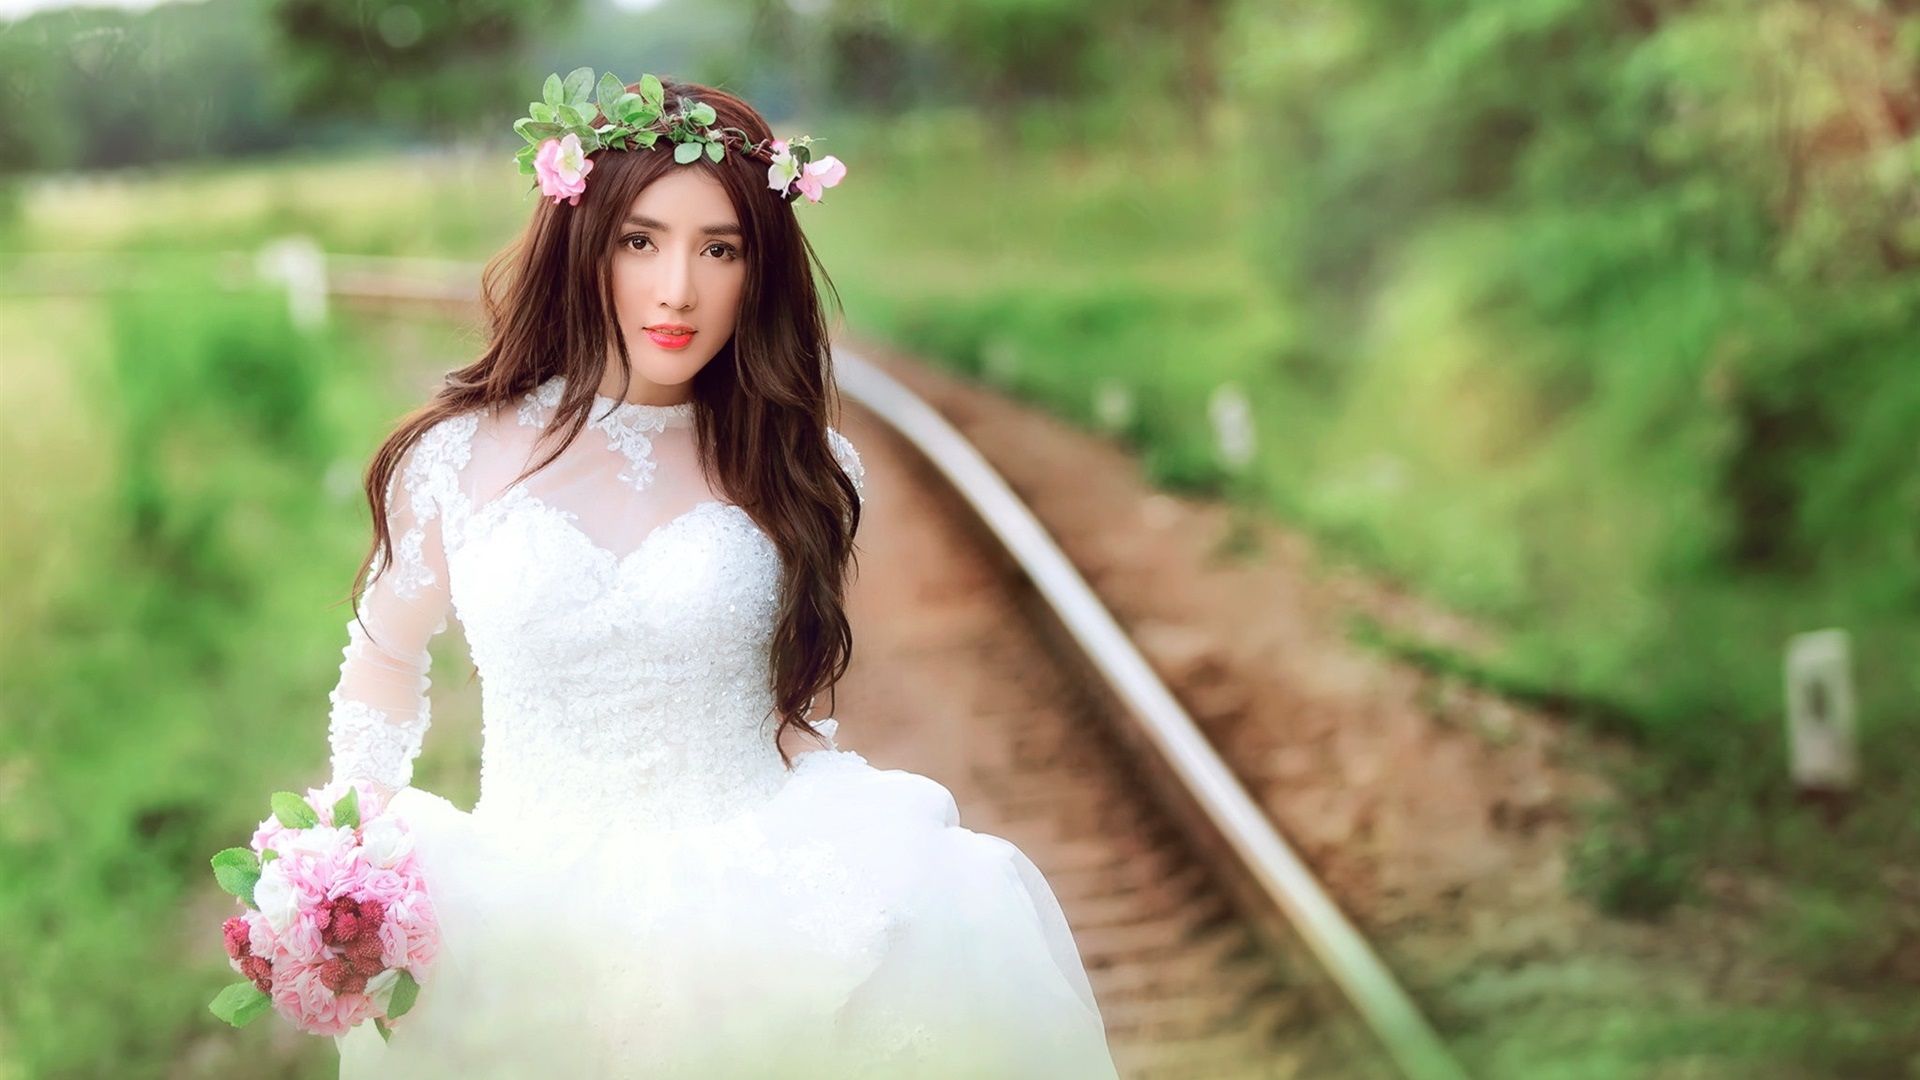 Wallpaper Beautiful bride, white dress girl 1920x1080 Full HD 2K Picture, Image